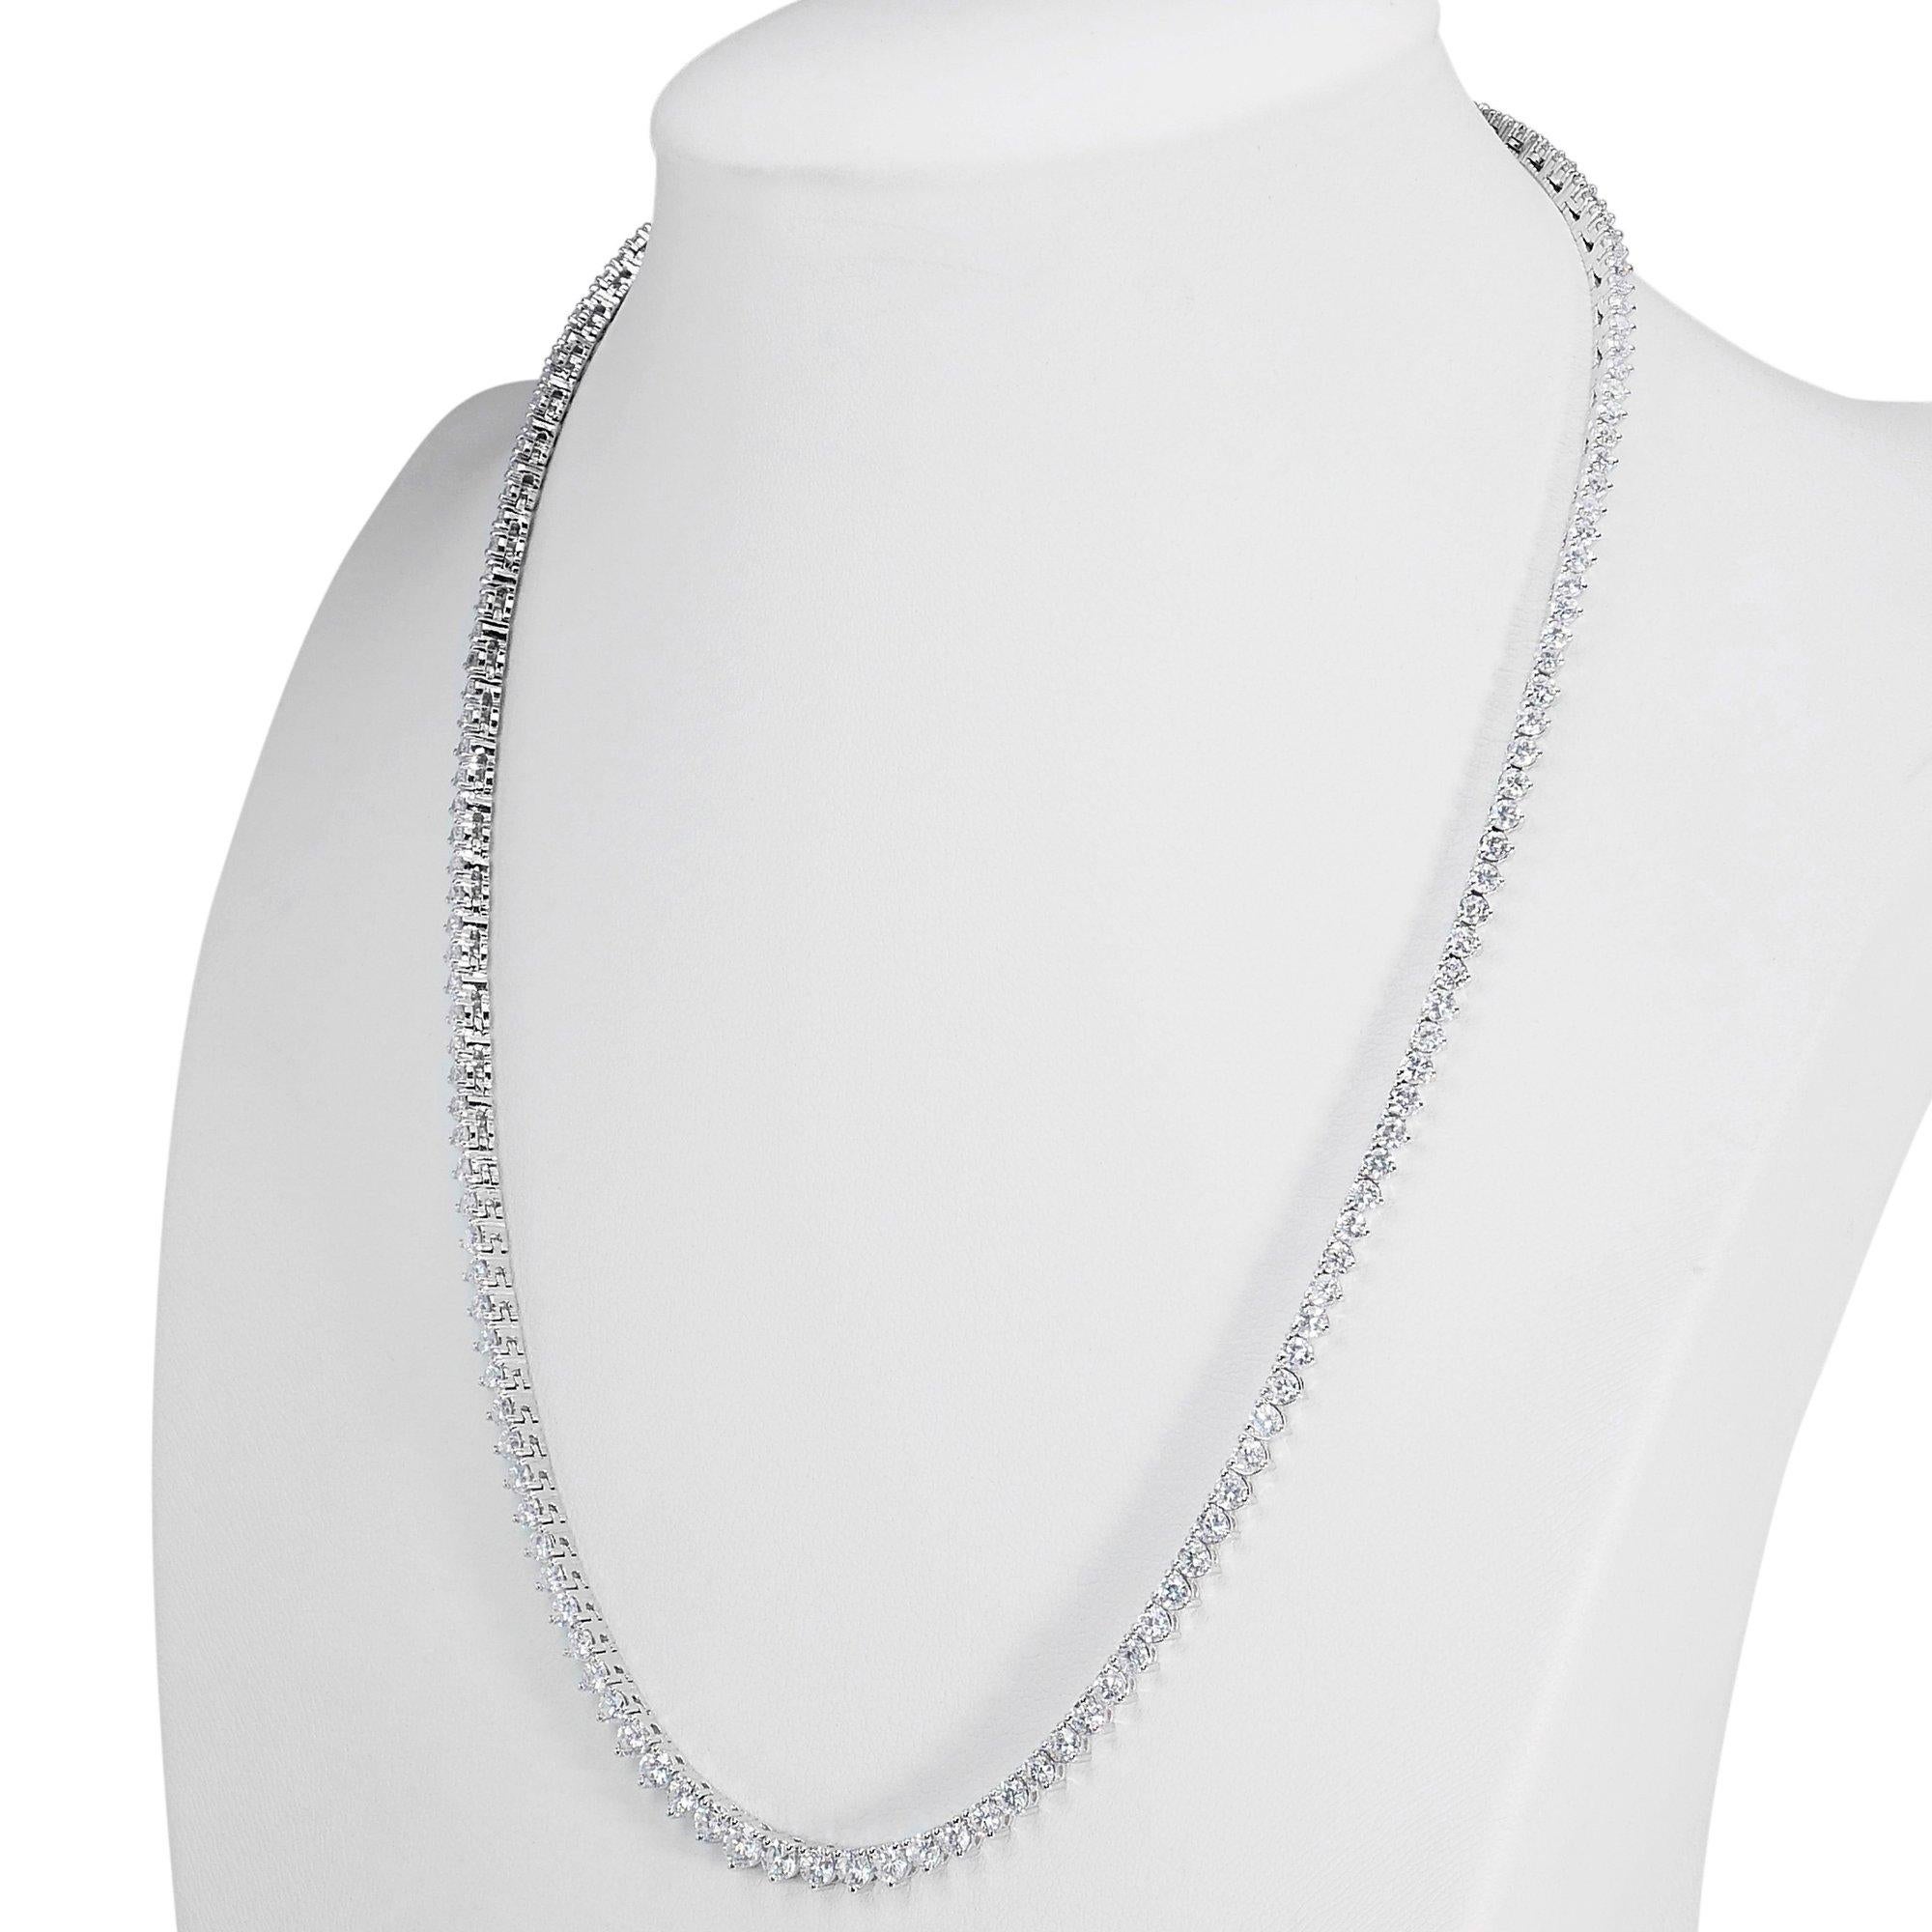 Women's Ravishing 14k White Gold Necklace w/ 8.36 ct Natural Diamonds IGI Certificate For Sale